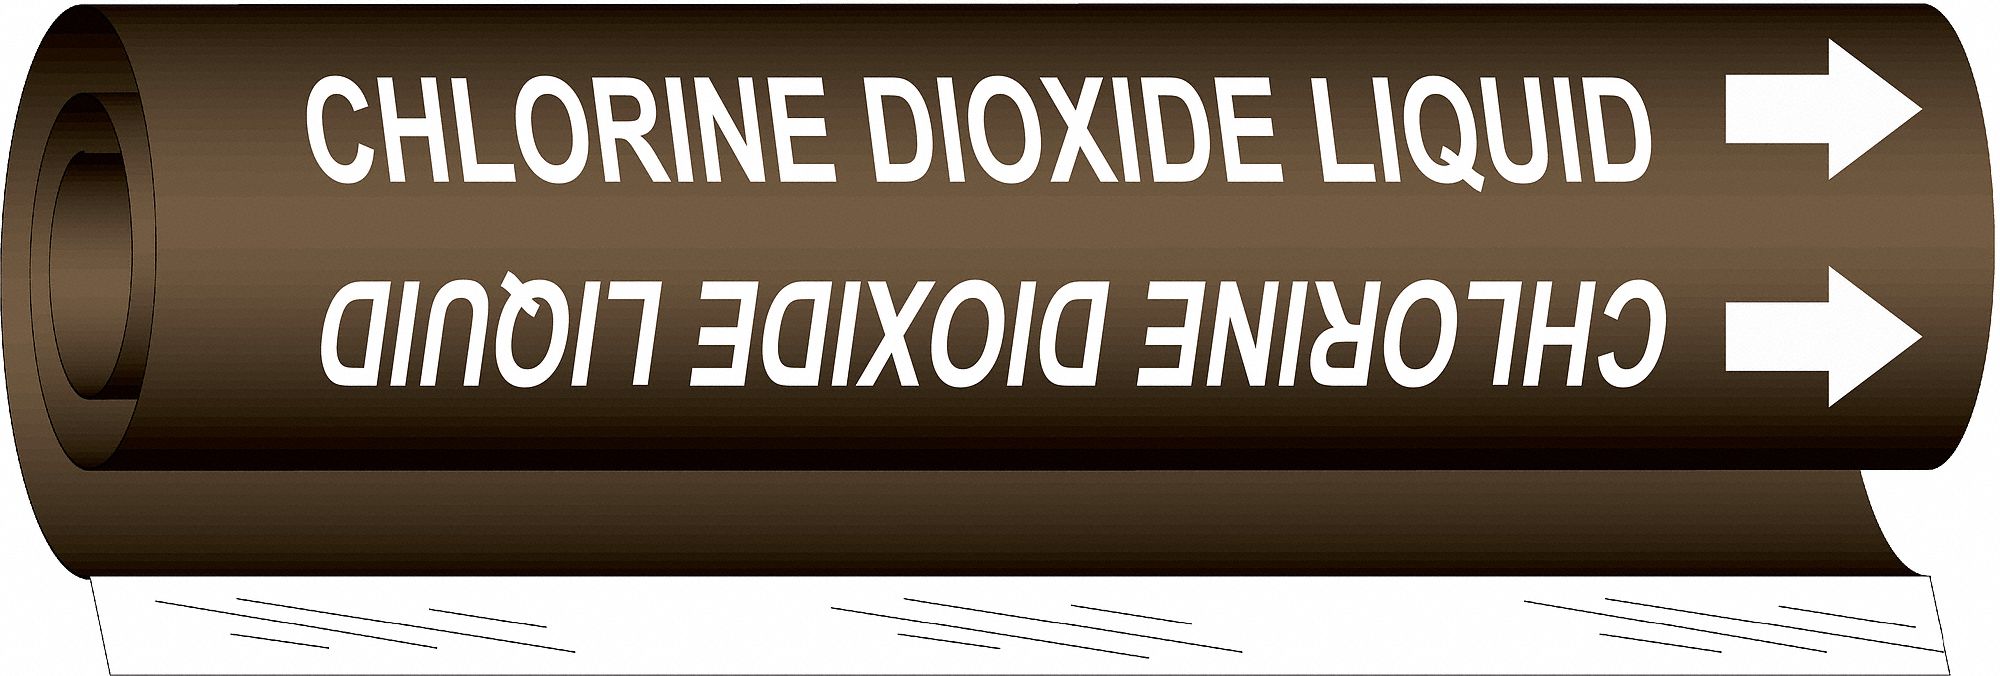 Pipe Marker,Chlorine Dioxide Liquid